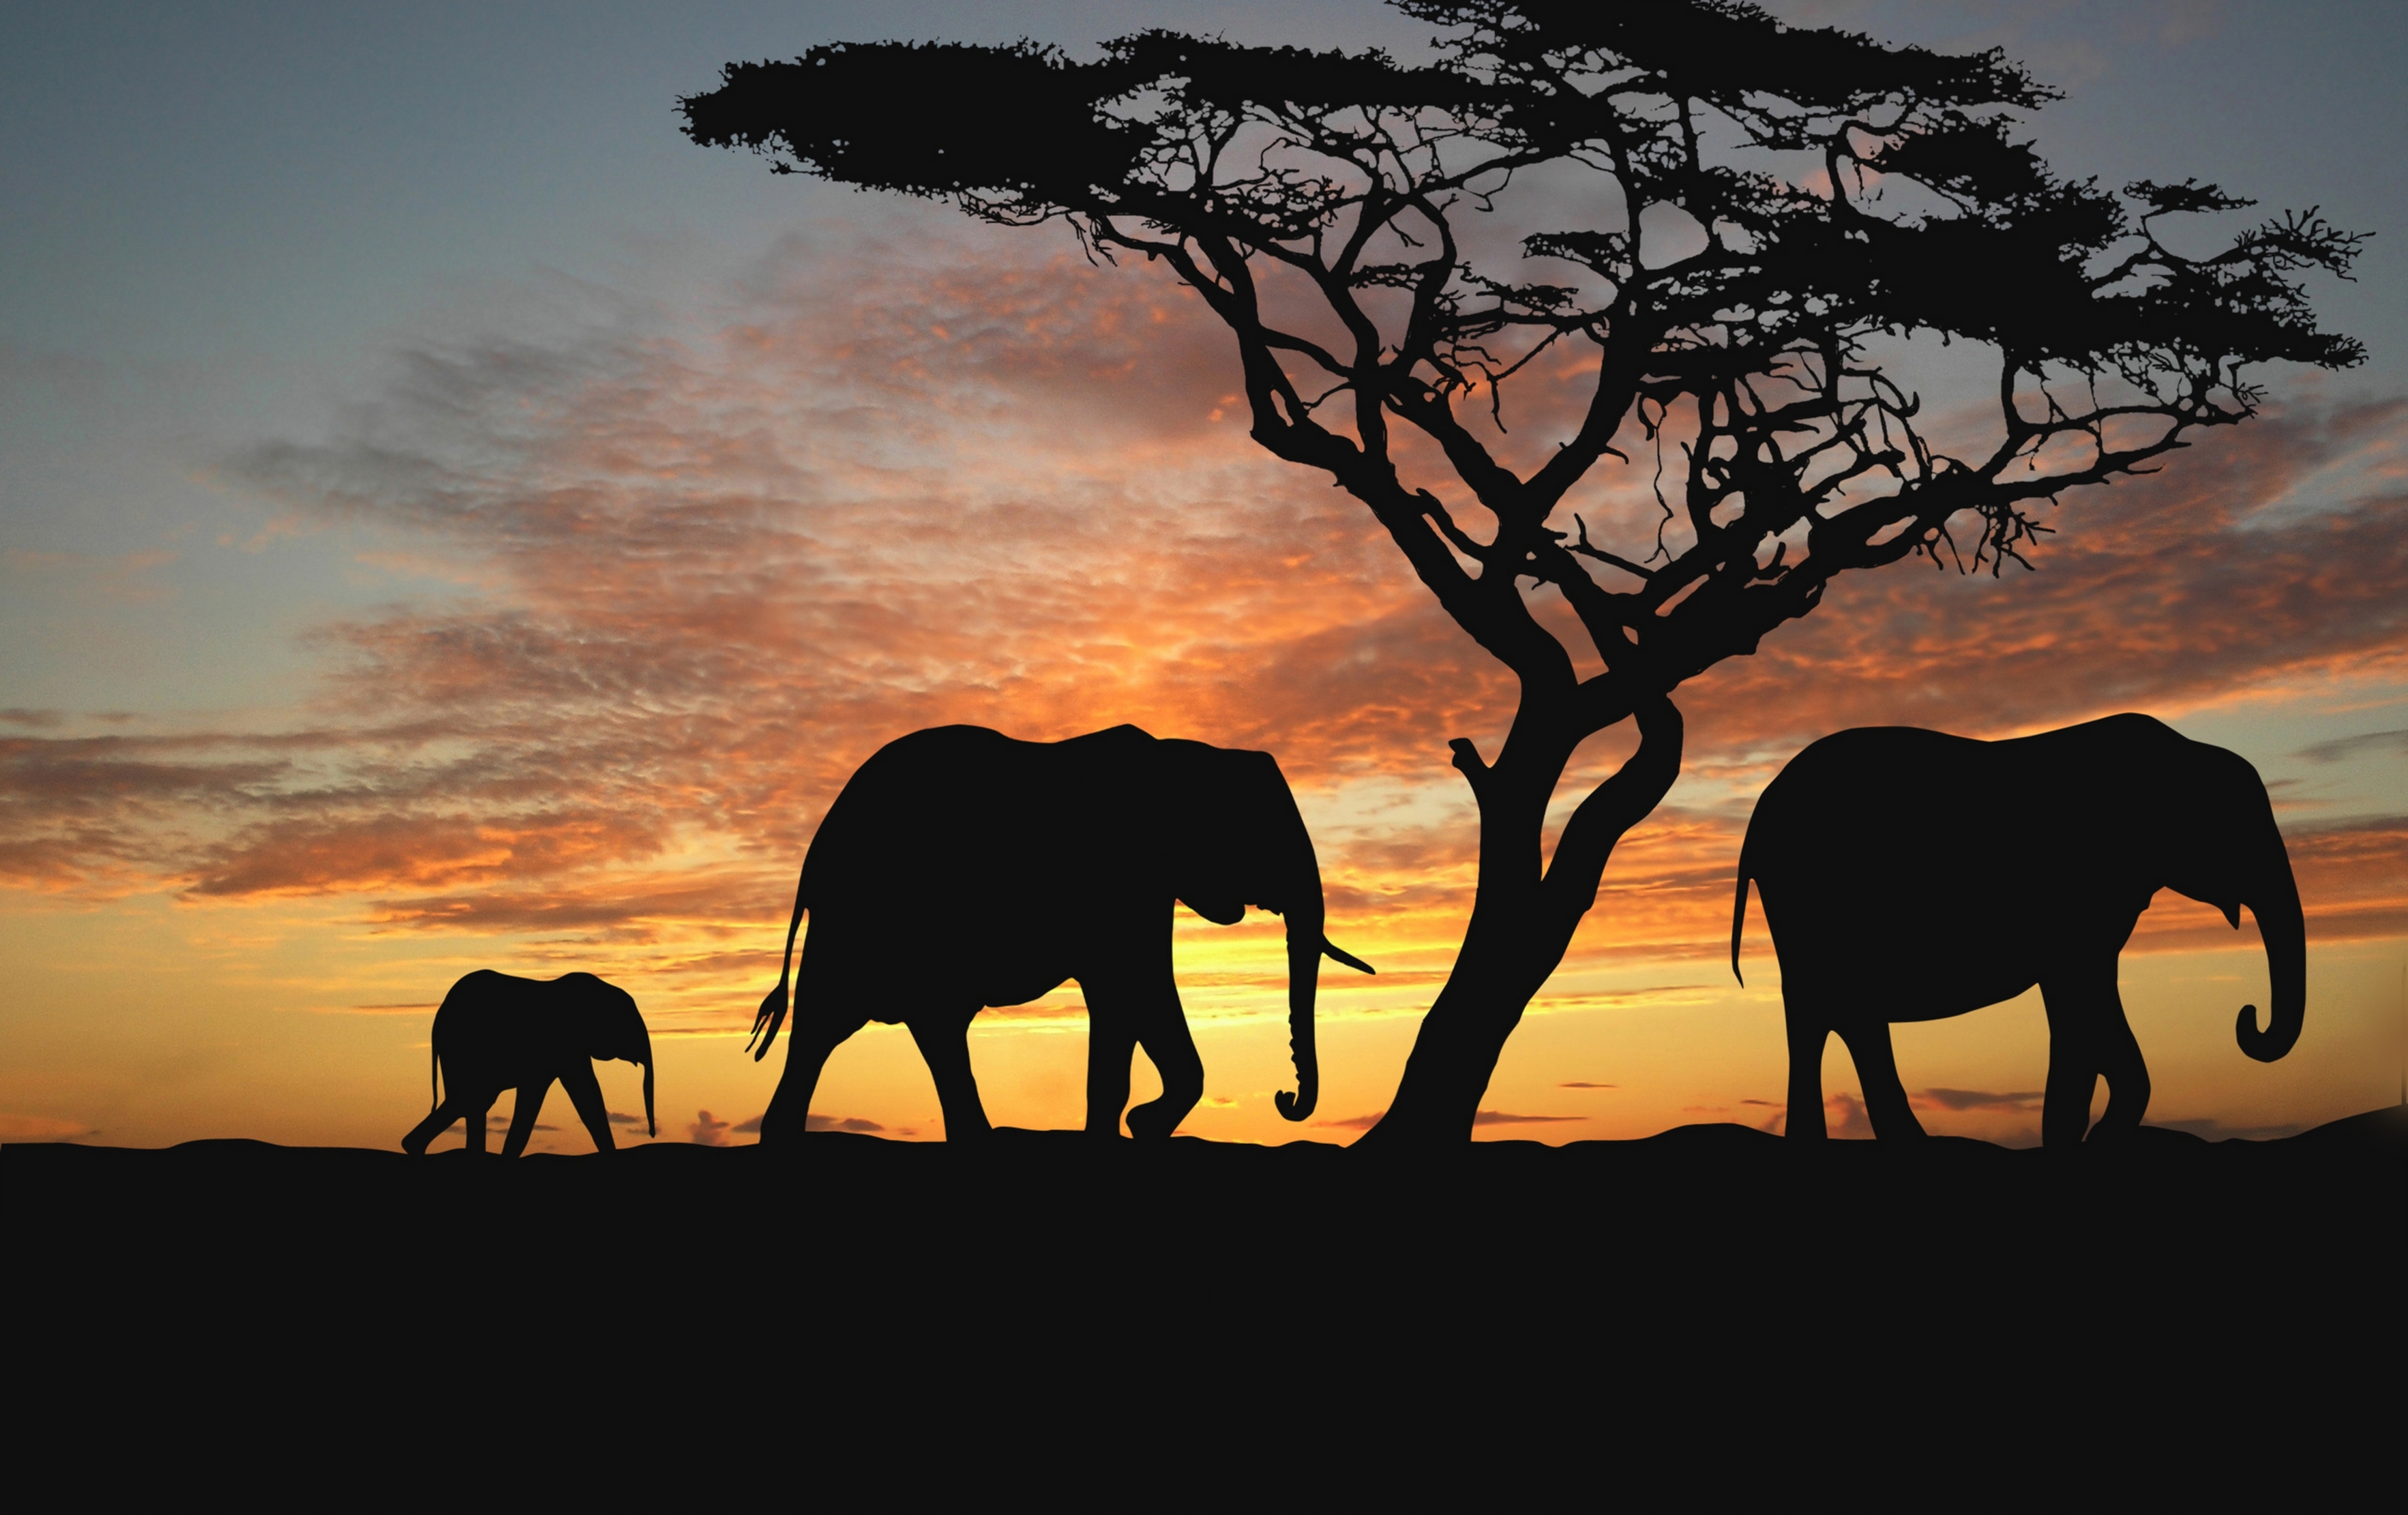 elephants cub walking free awesome image for mobile